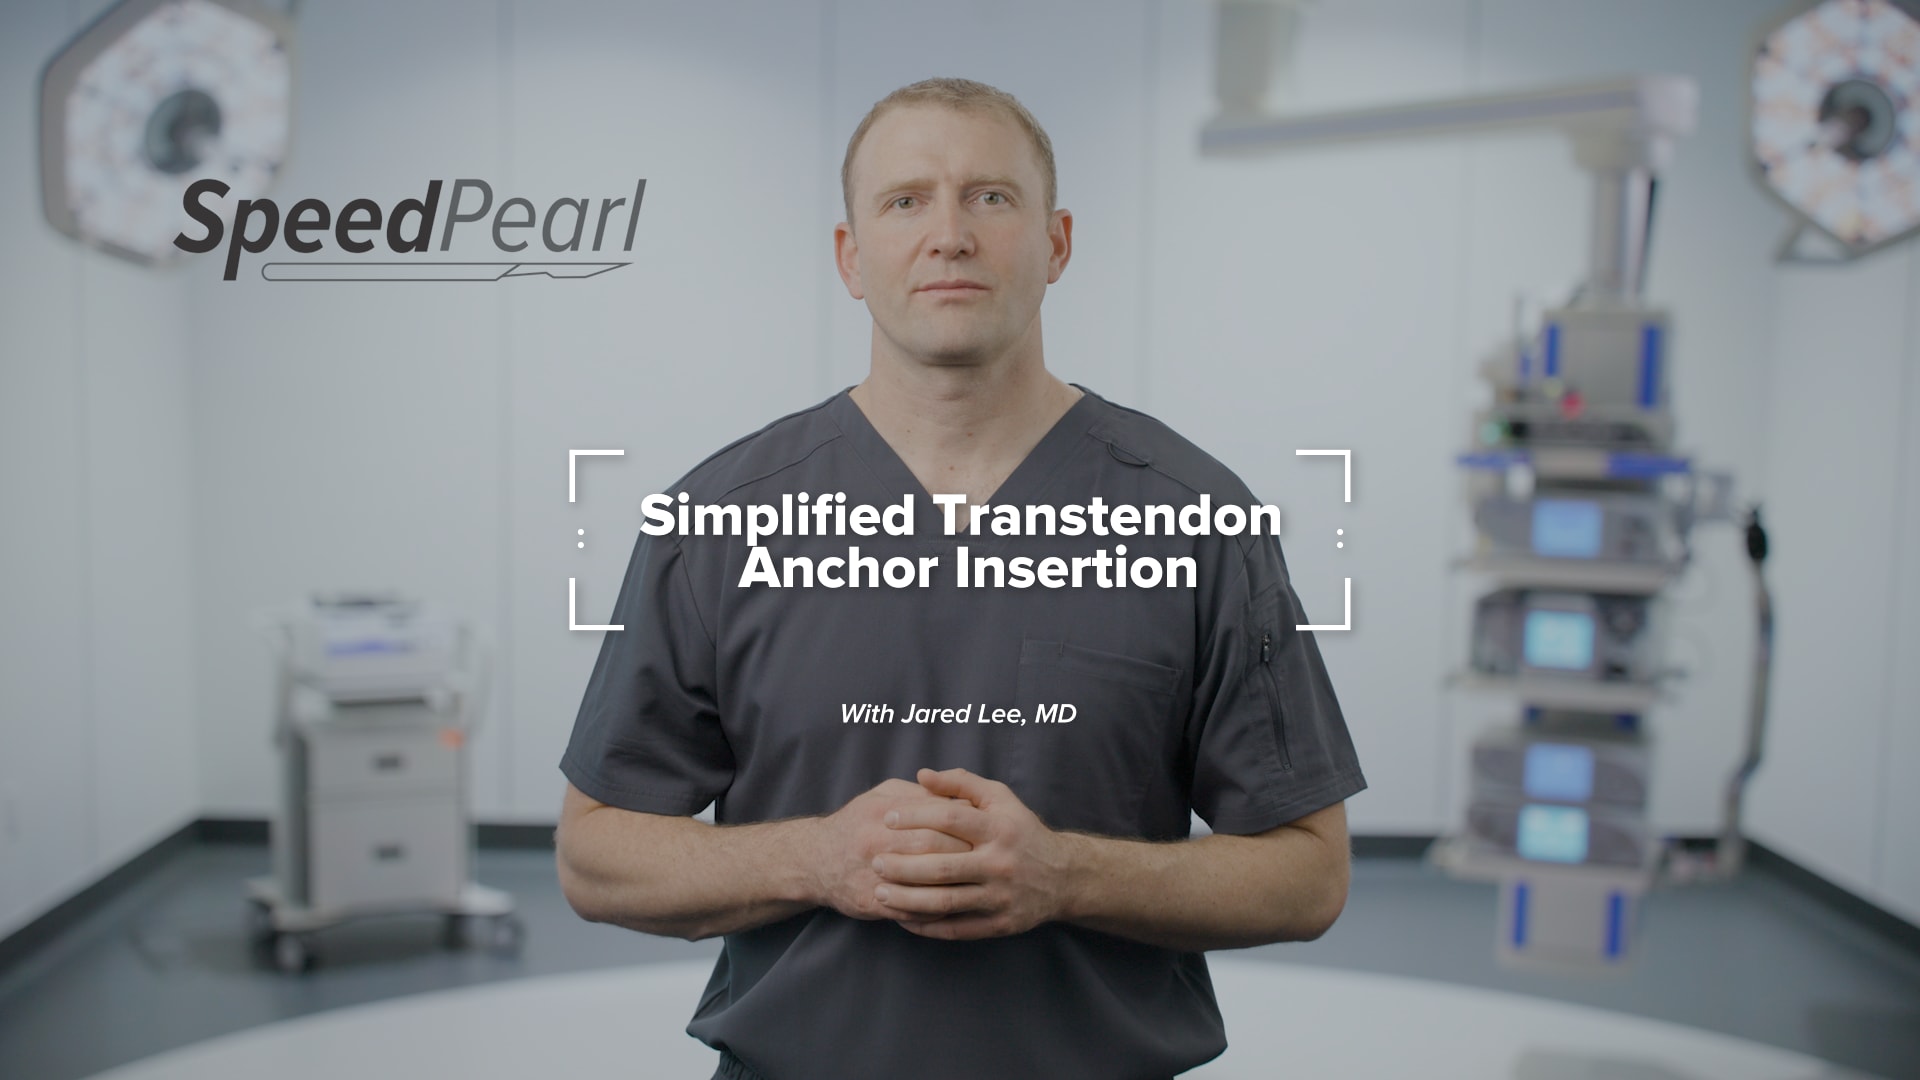 SpeedPearl: Simplified Subscapularis Transtendon Anchor Insertion